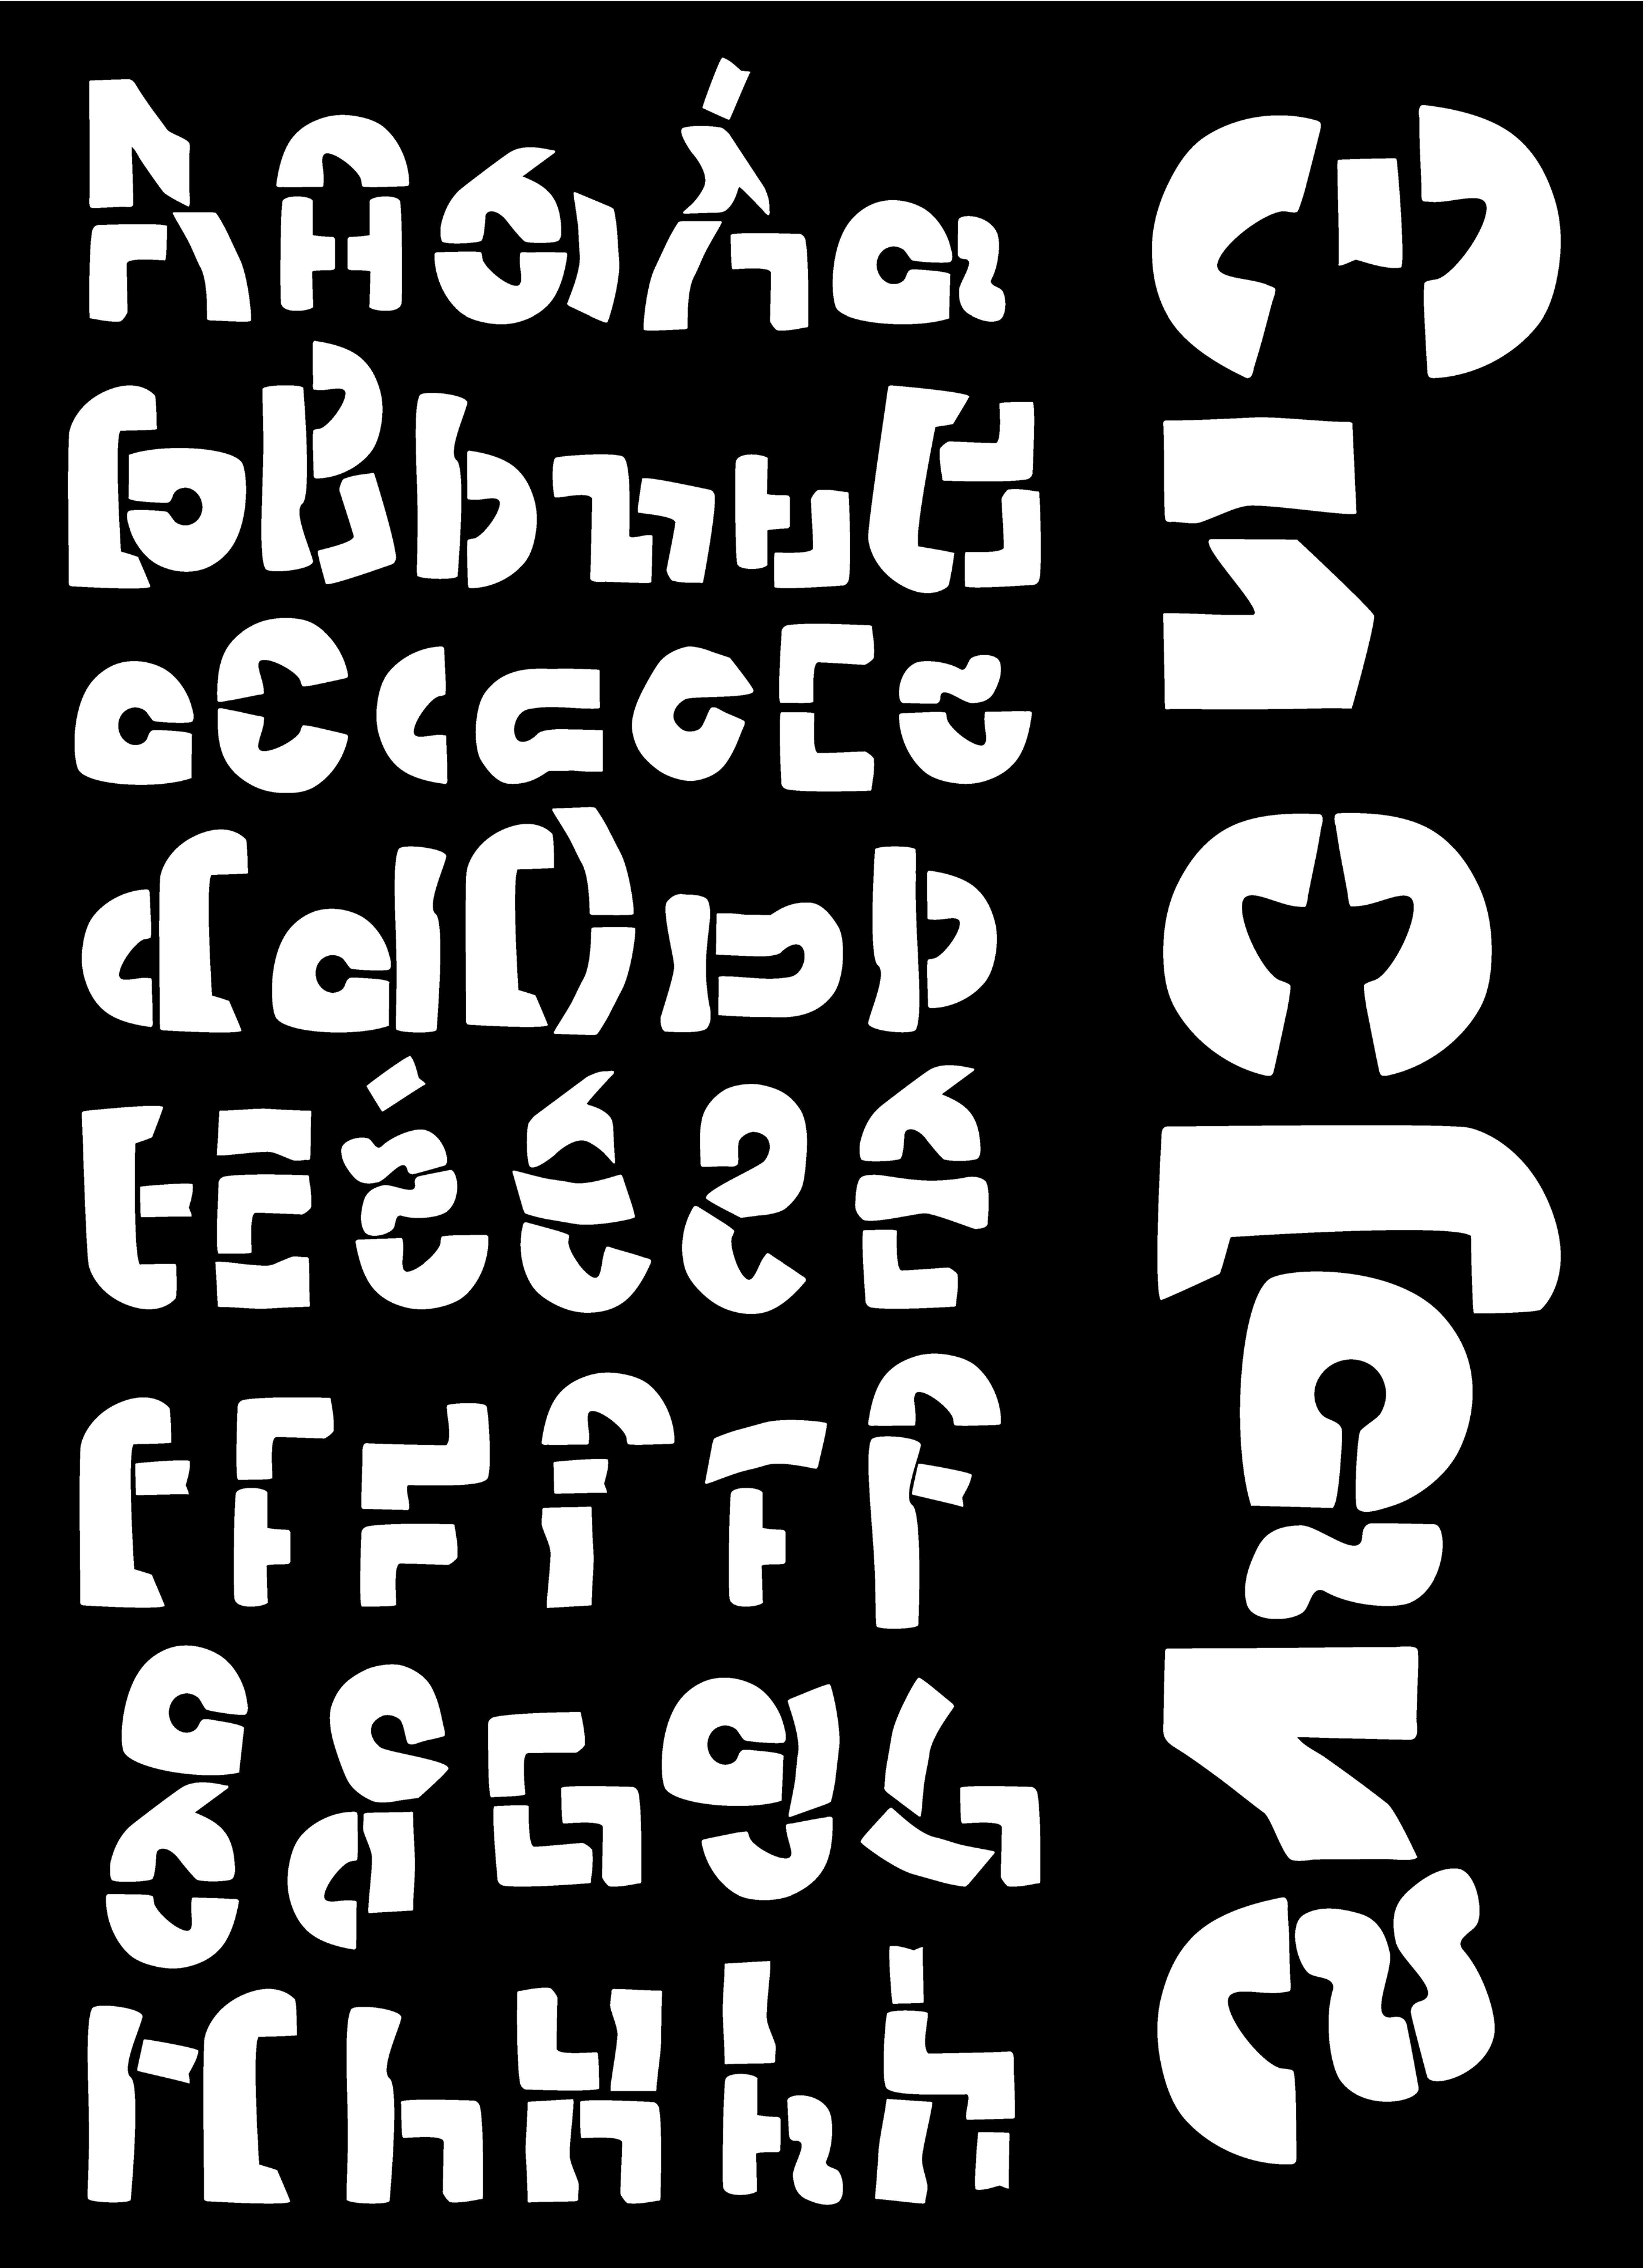 type design and stencil set by Graciela Batista